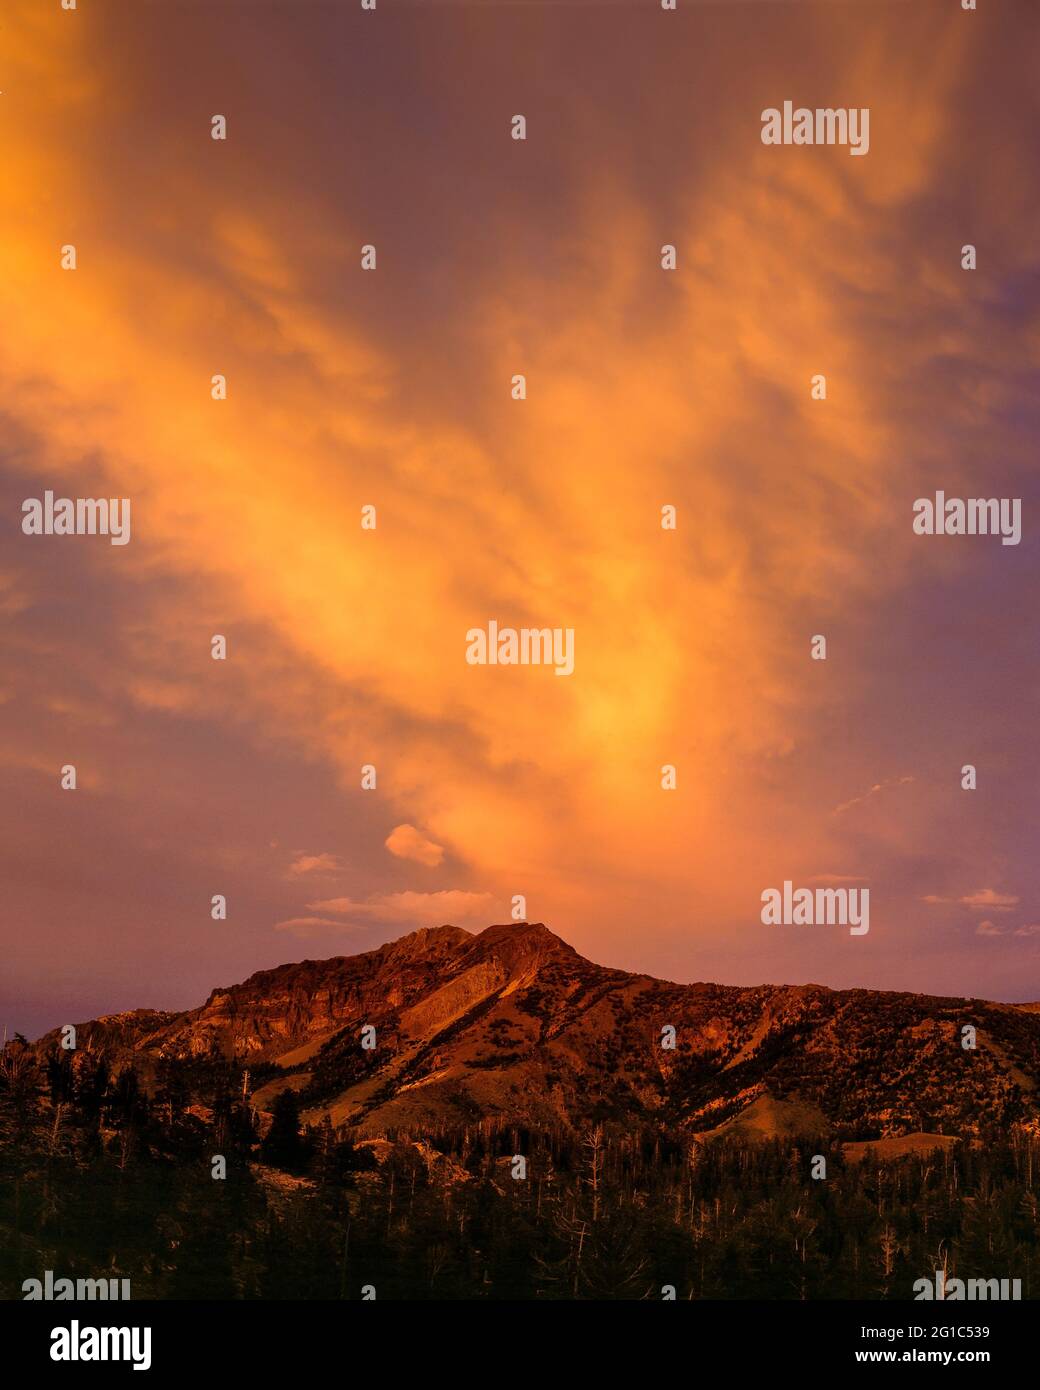 Sonnenuntergang, Silver Peak, Carson-Iceberg Wüste, Stanislaus National Forest, Sierra Nevada, Kalifornien Stockfoto